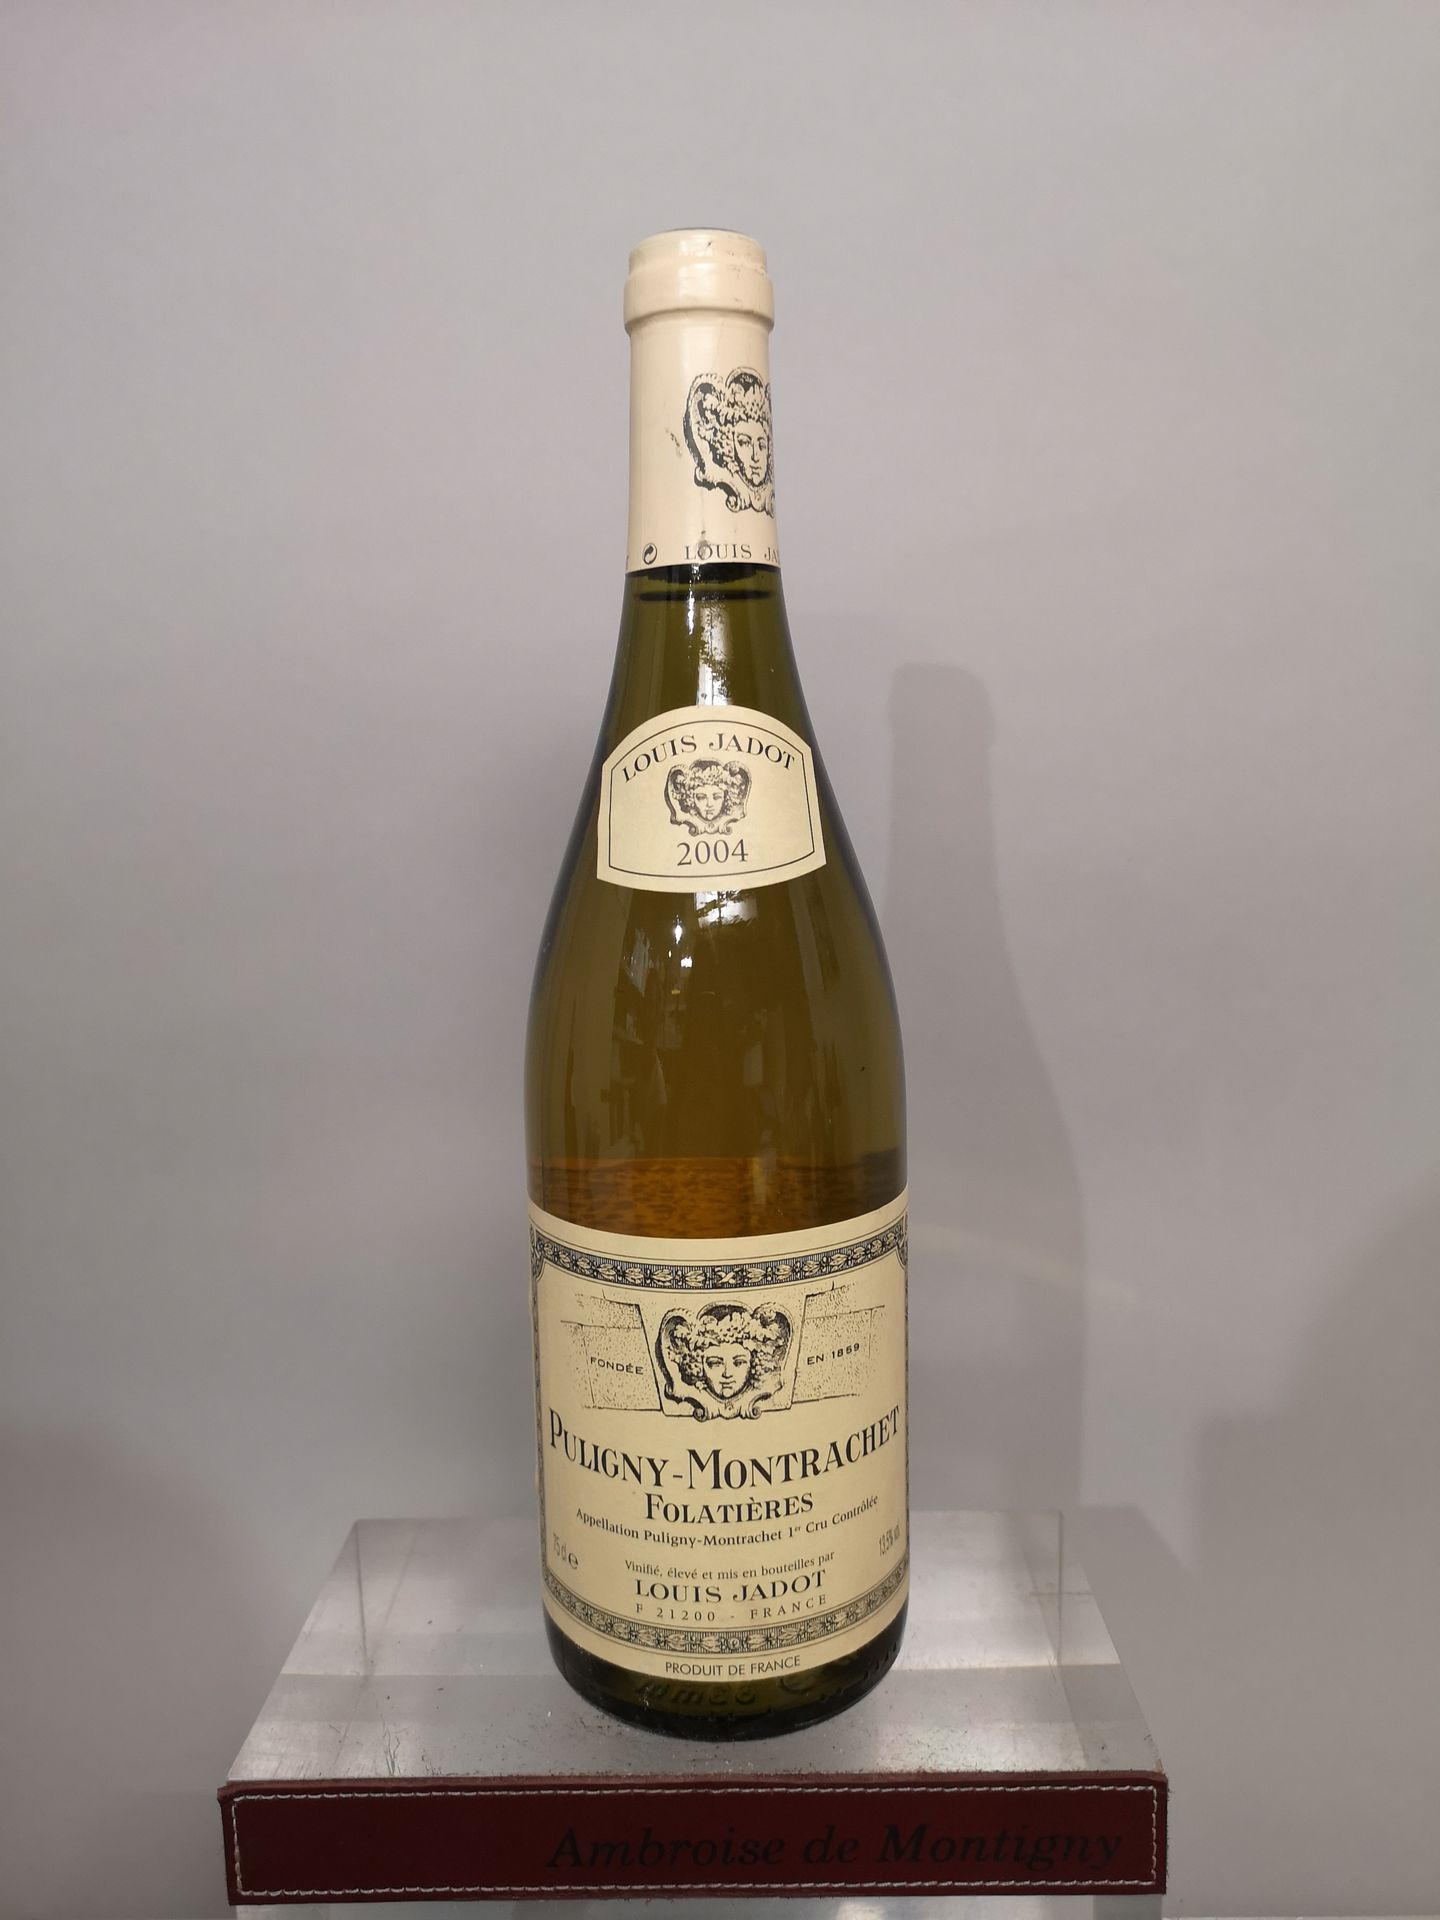 Null 1瓶PULIGNY MONTRACHET 1er cru "Folatières" - L. JADOT 2004